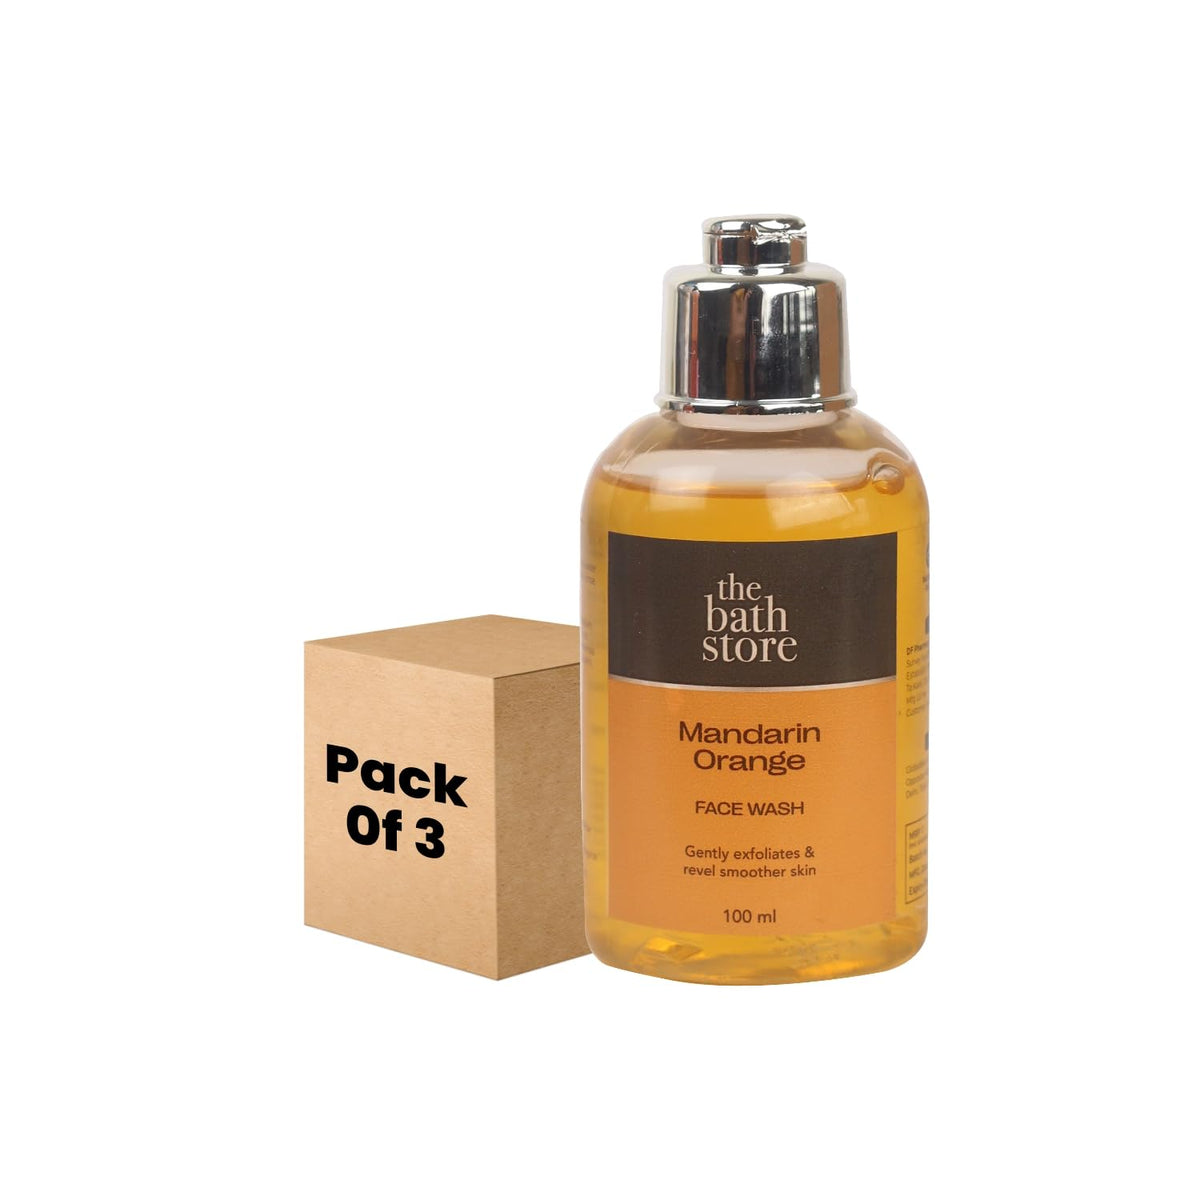 The Bath Store Mandarin Orange Face Wash - Gentle Exfoliation | Deep Cleansing - 100ml (Pack of 3)